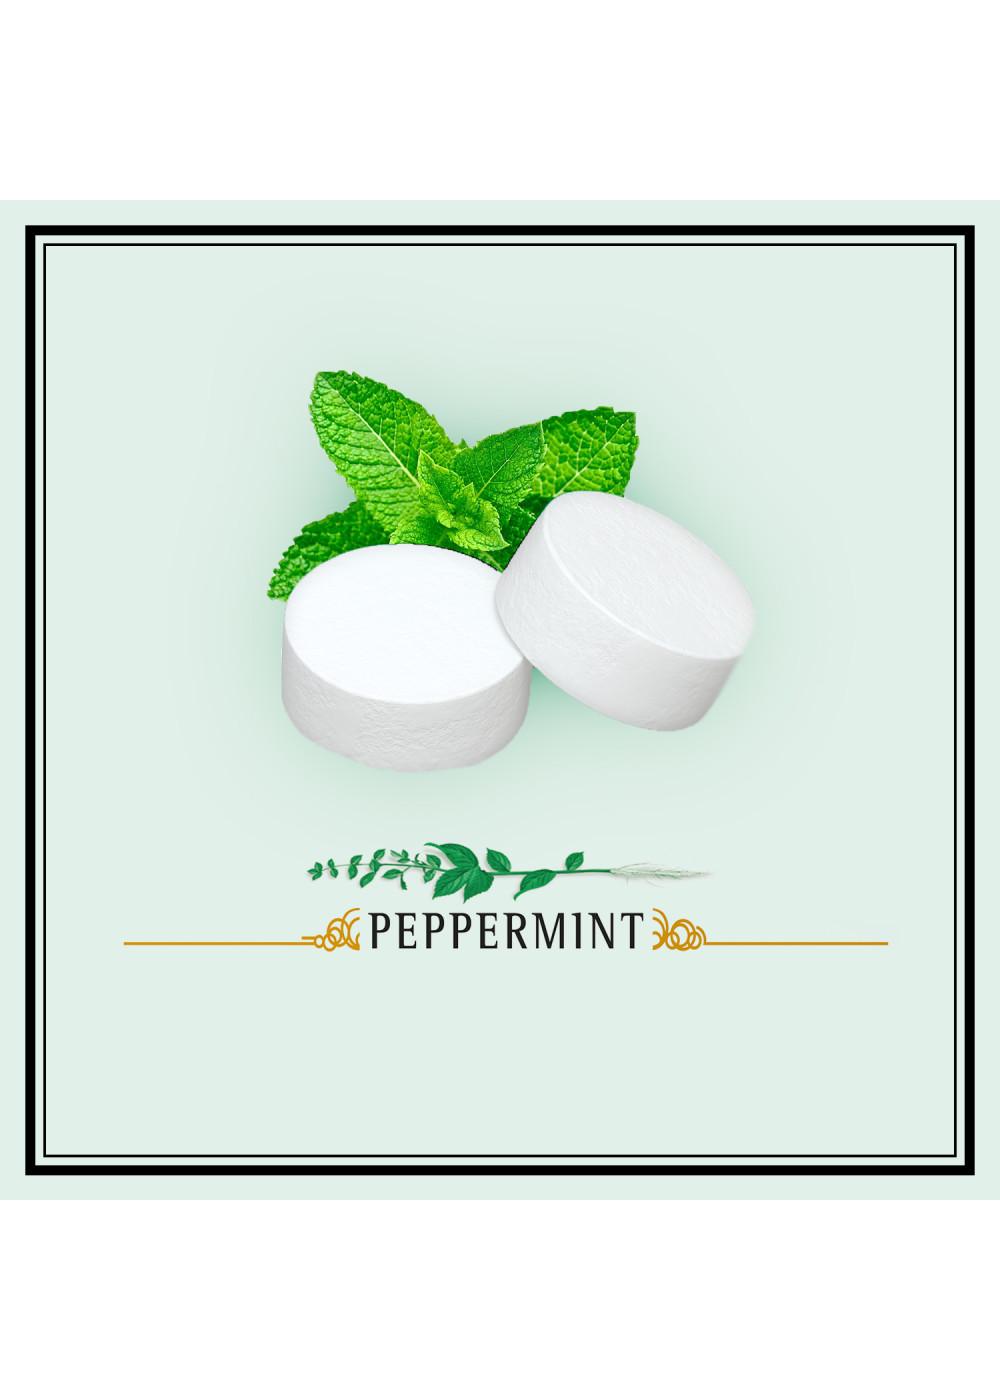 Altoids Classic Peppermint Breath Mints; image 6 of 7